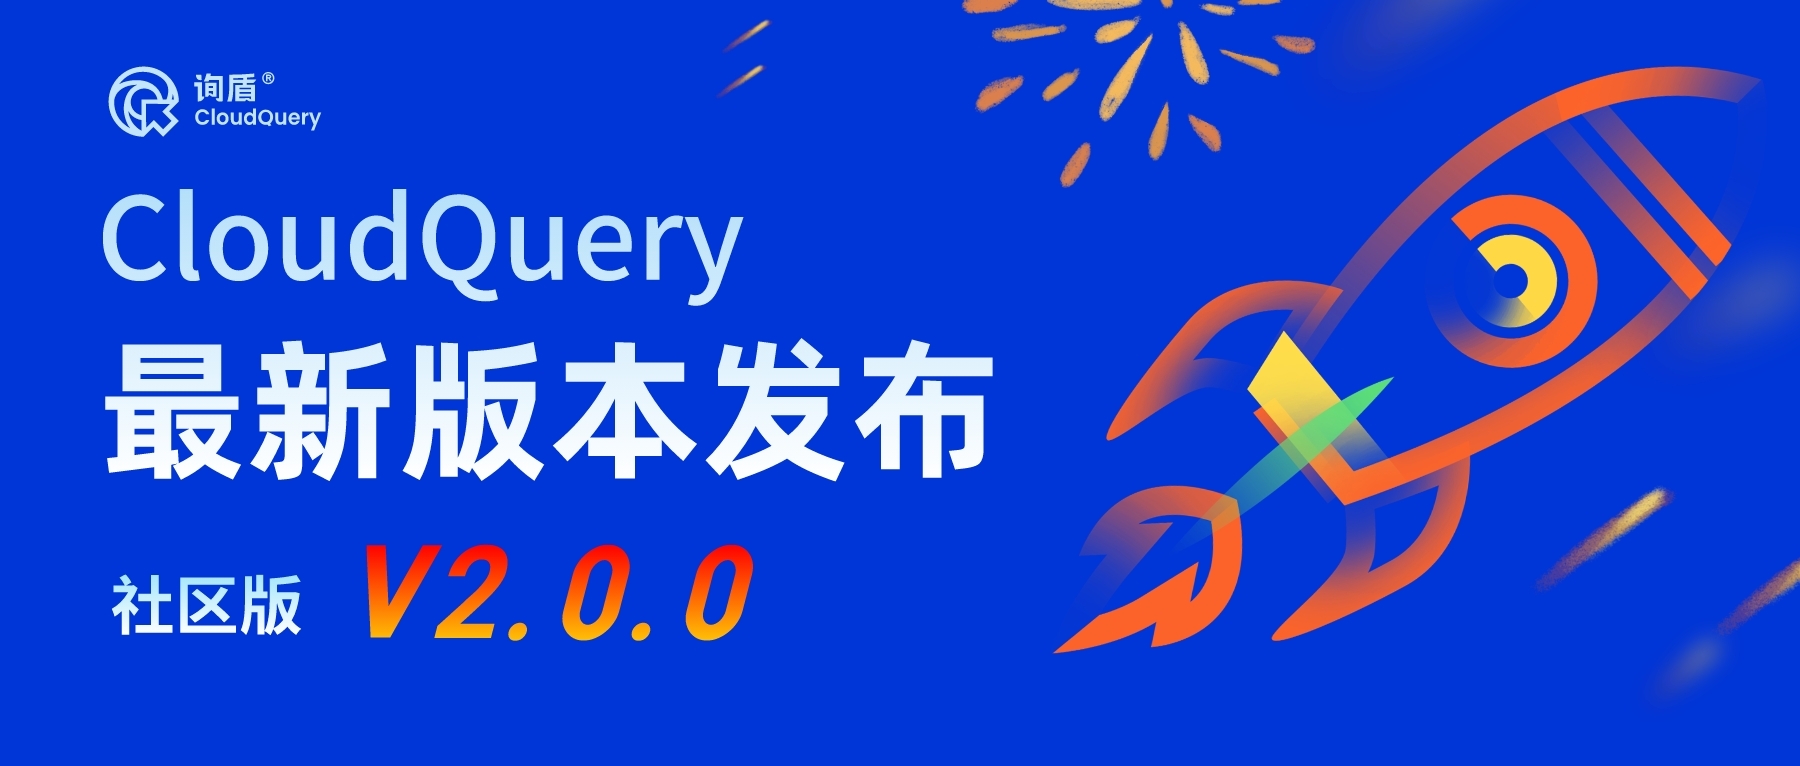 CloudQuery v2.0.0 发布  新增数据保护、数据变更、连接管理等功能